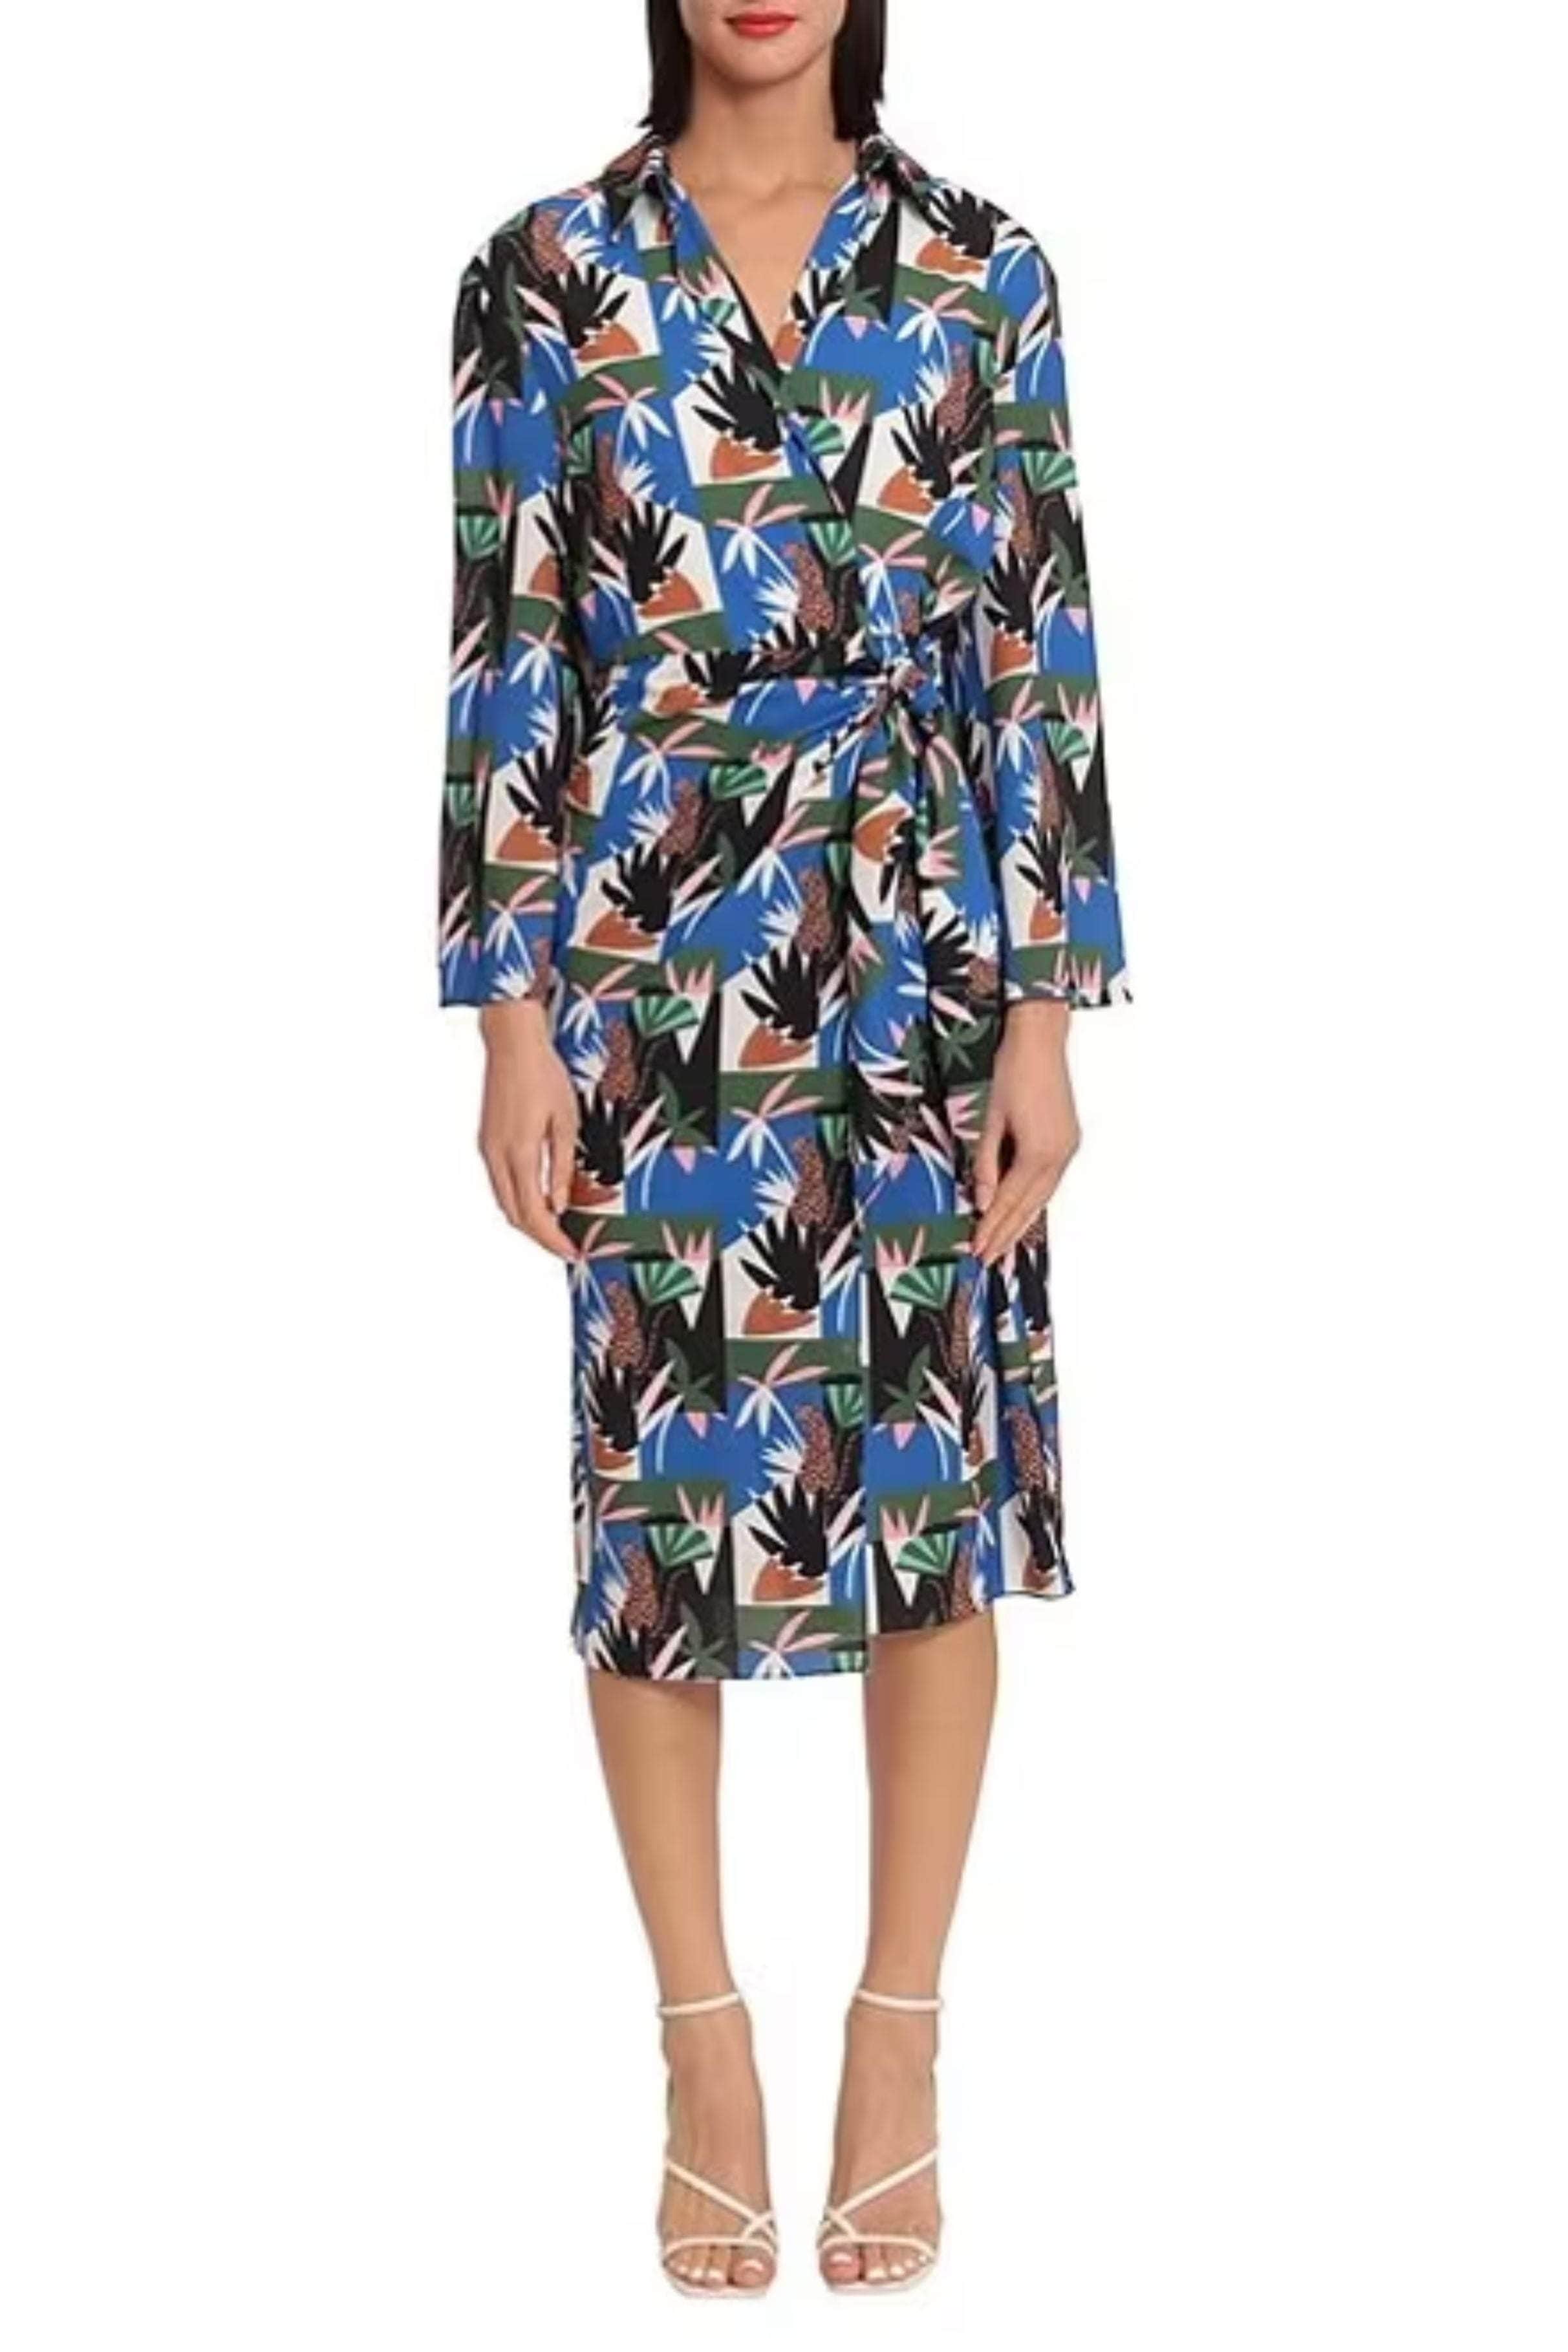 Image of Donna Morgan D8248M - Jungle Print Long Sleeve Casual Dress